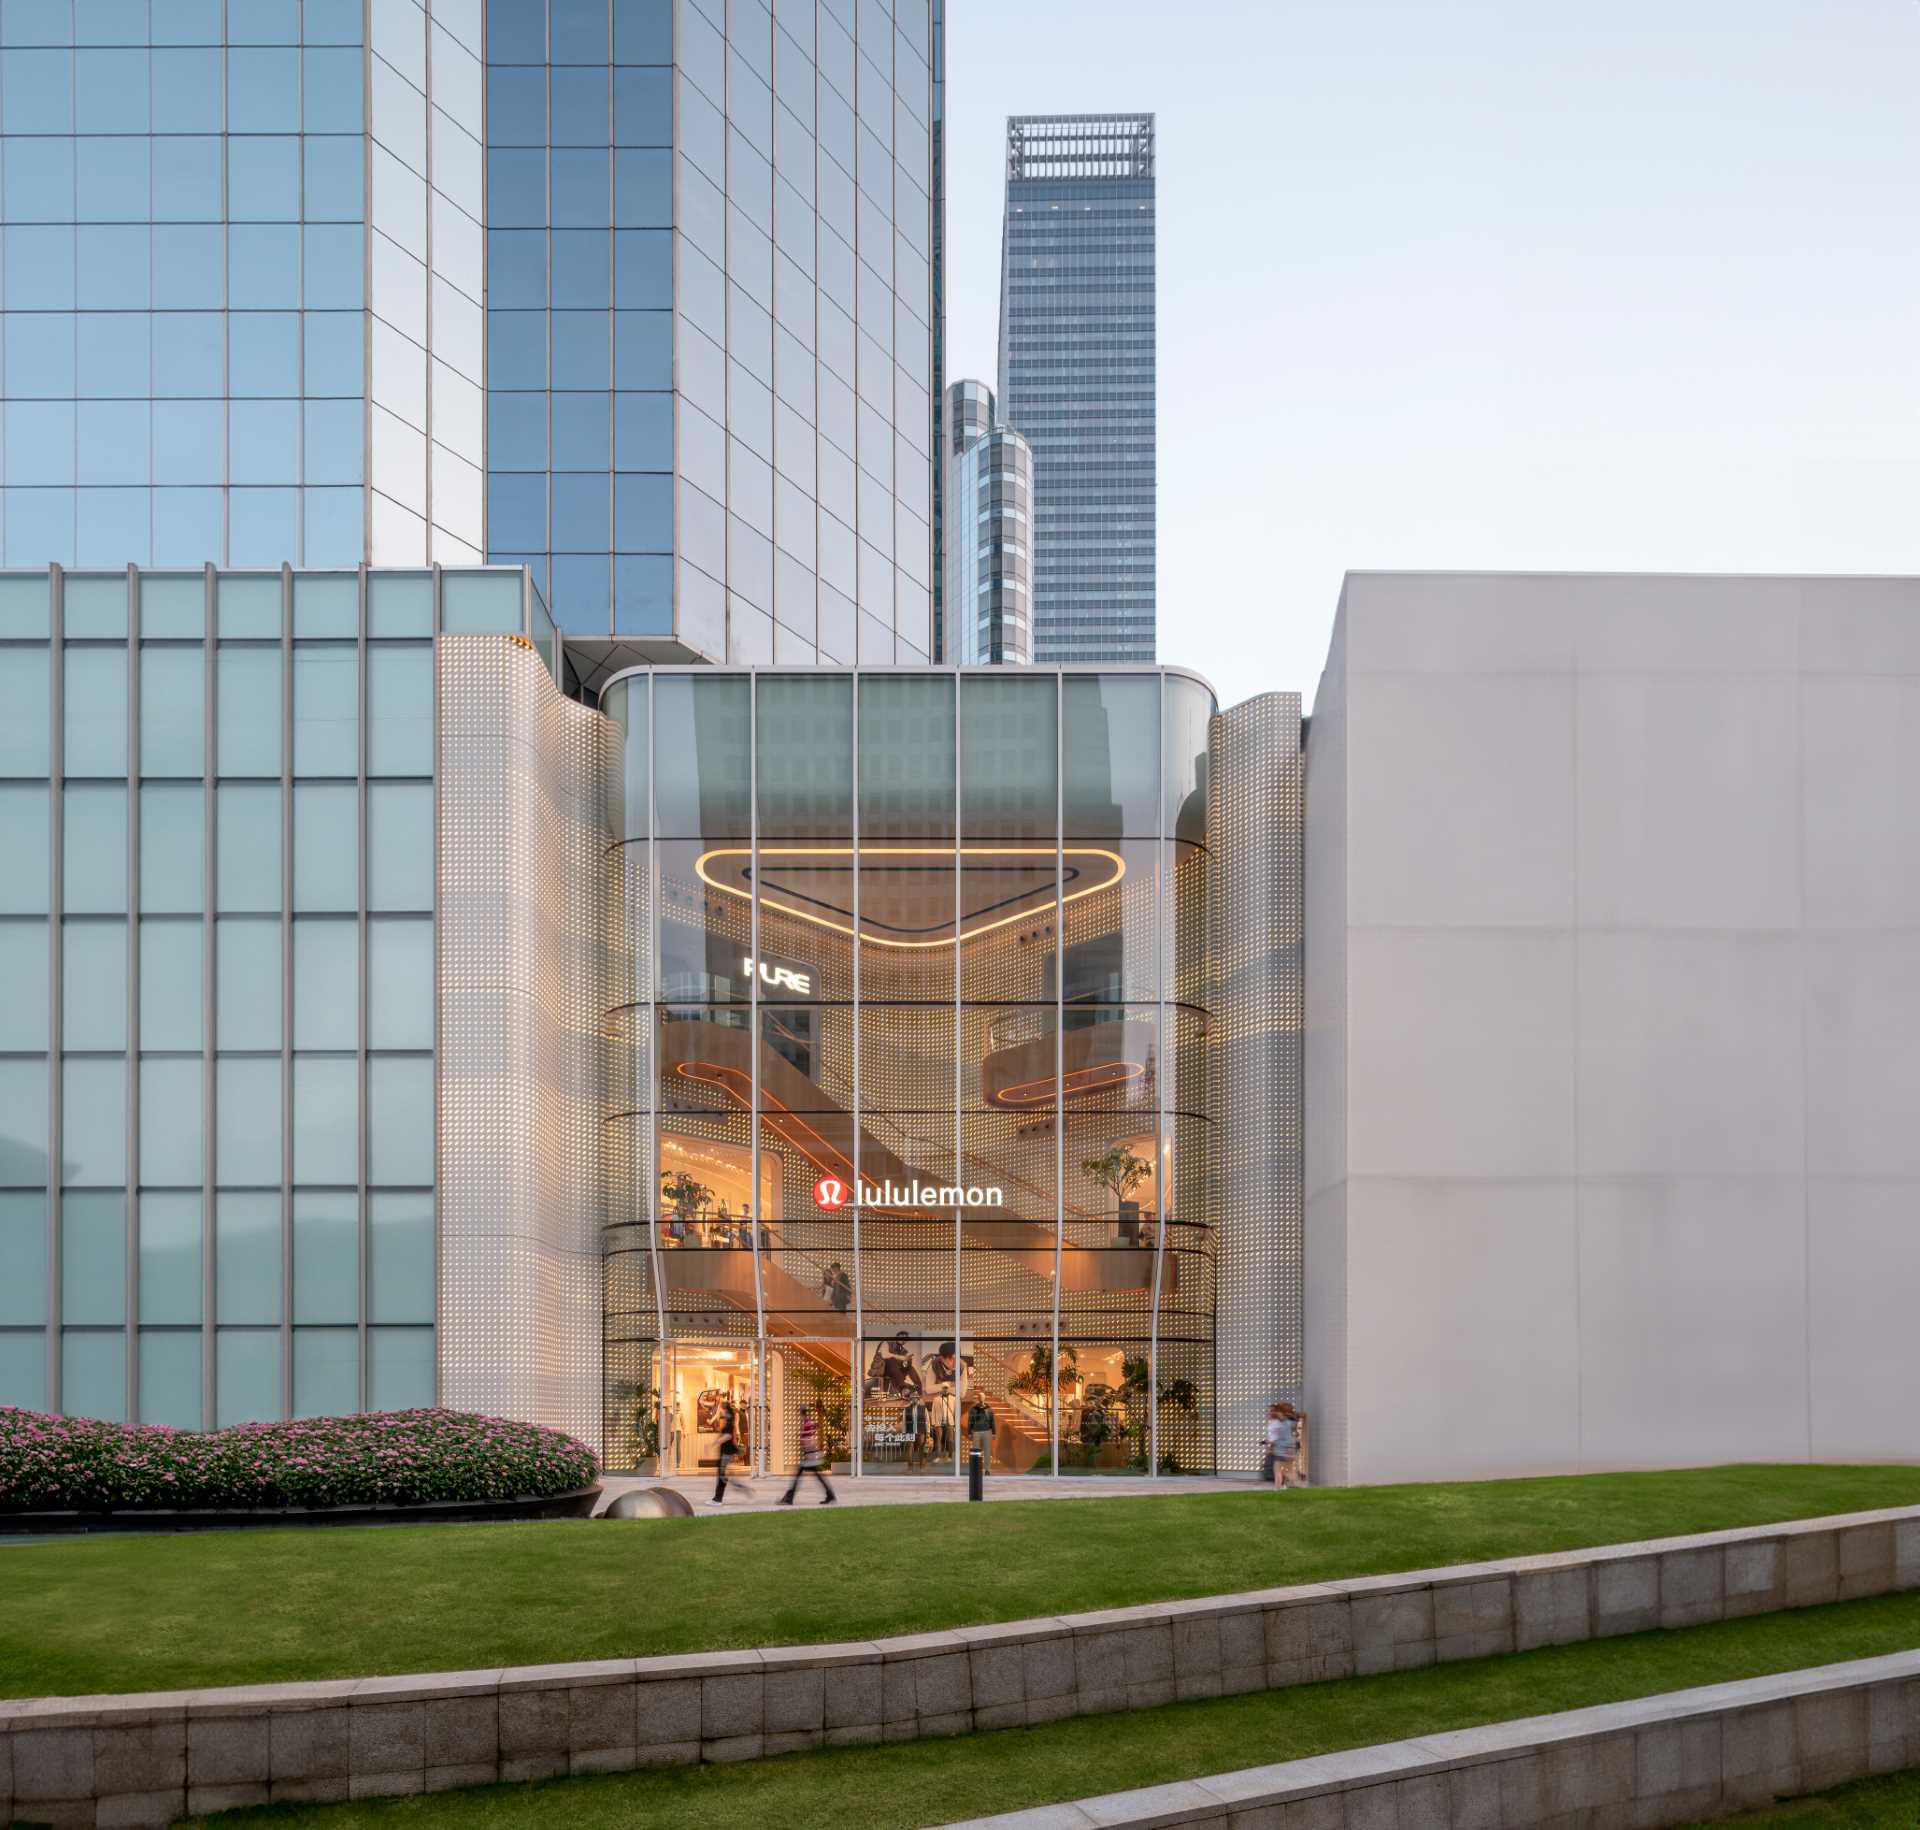 A modern Lululemon flagship store has a curved glass facade.